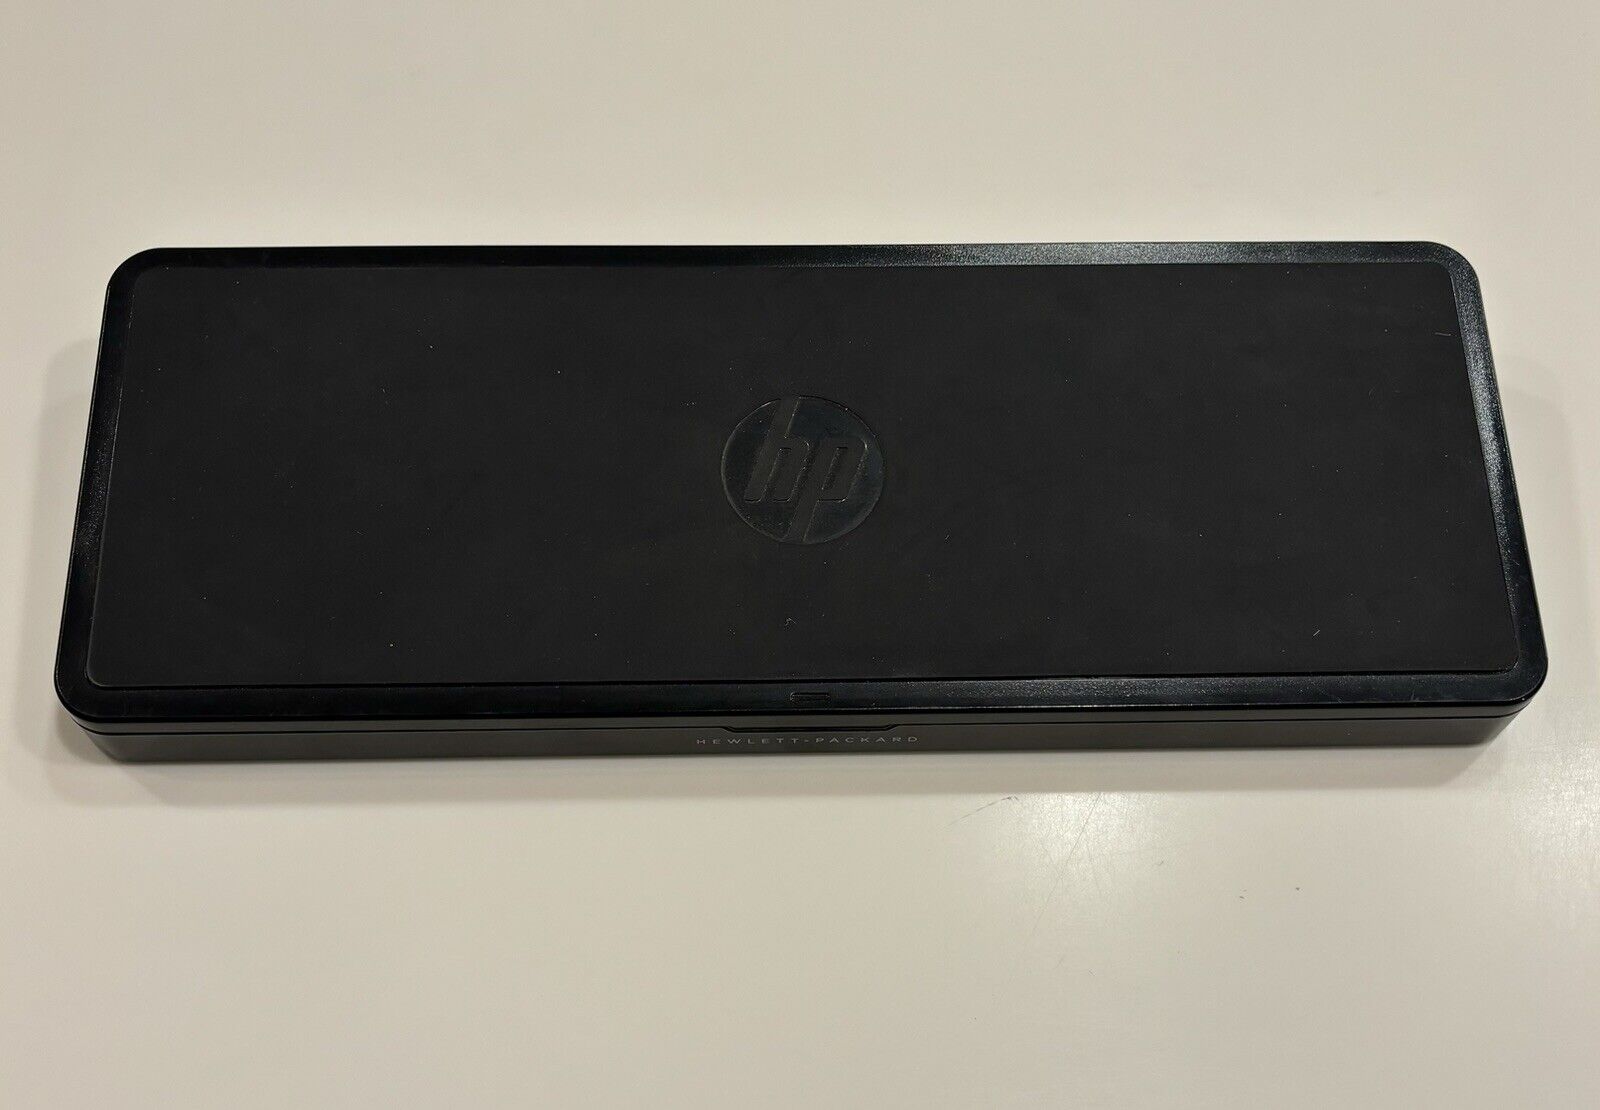 HP 736735-001 UNIVERSAL PORT REPLICATOR E6D70AA HDMI USB - NO CABLES - UNTESTED